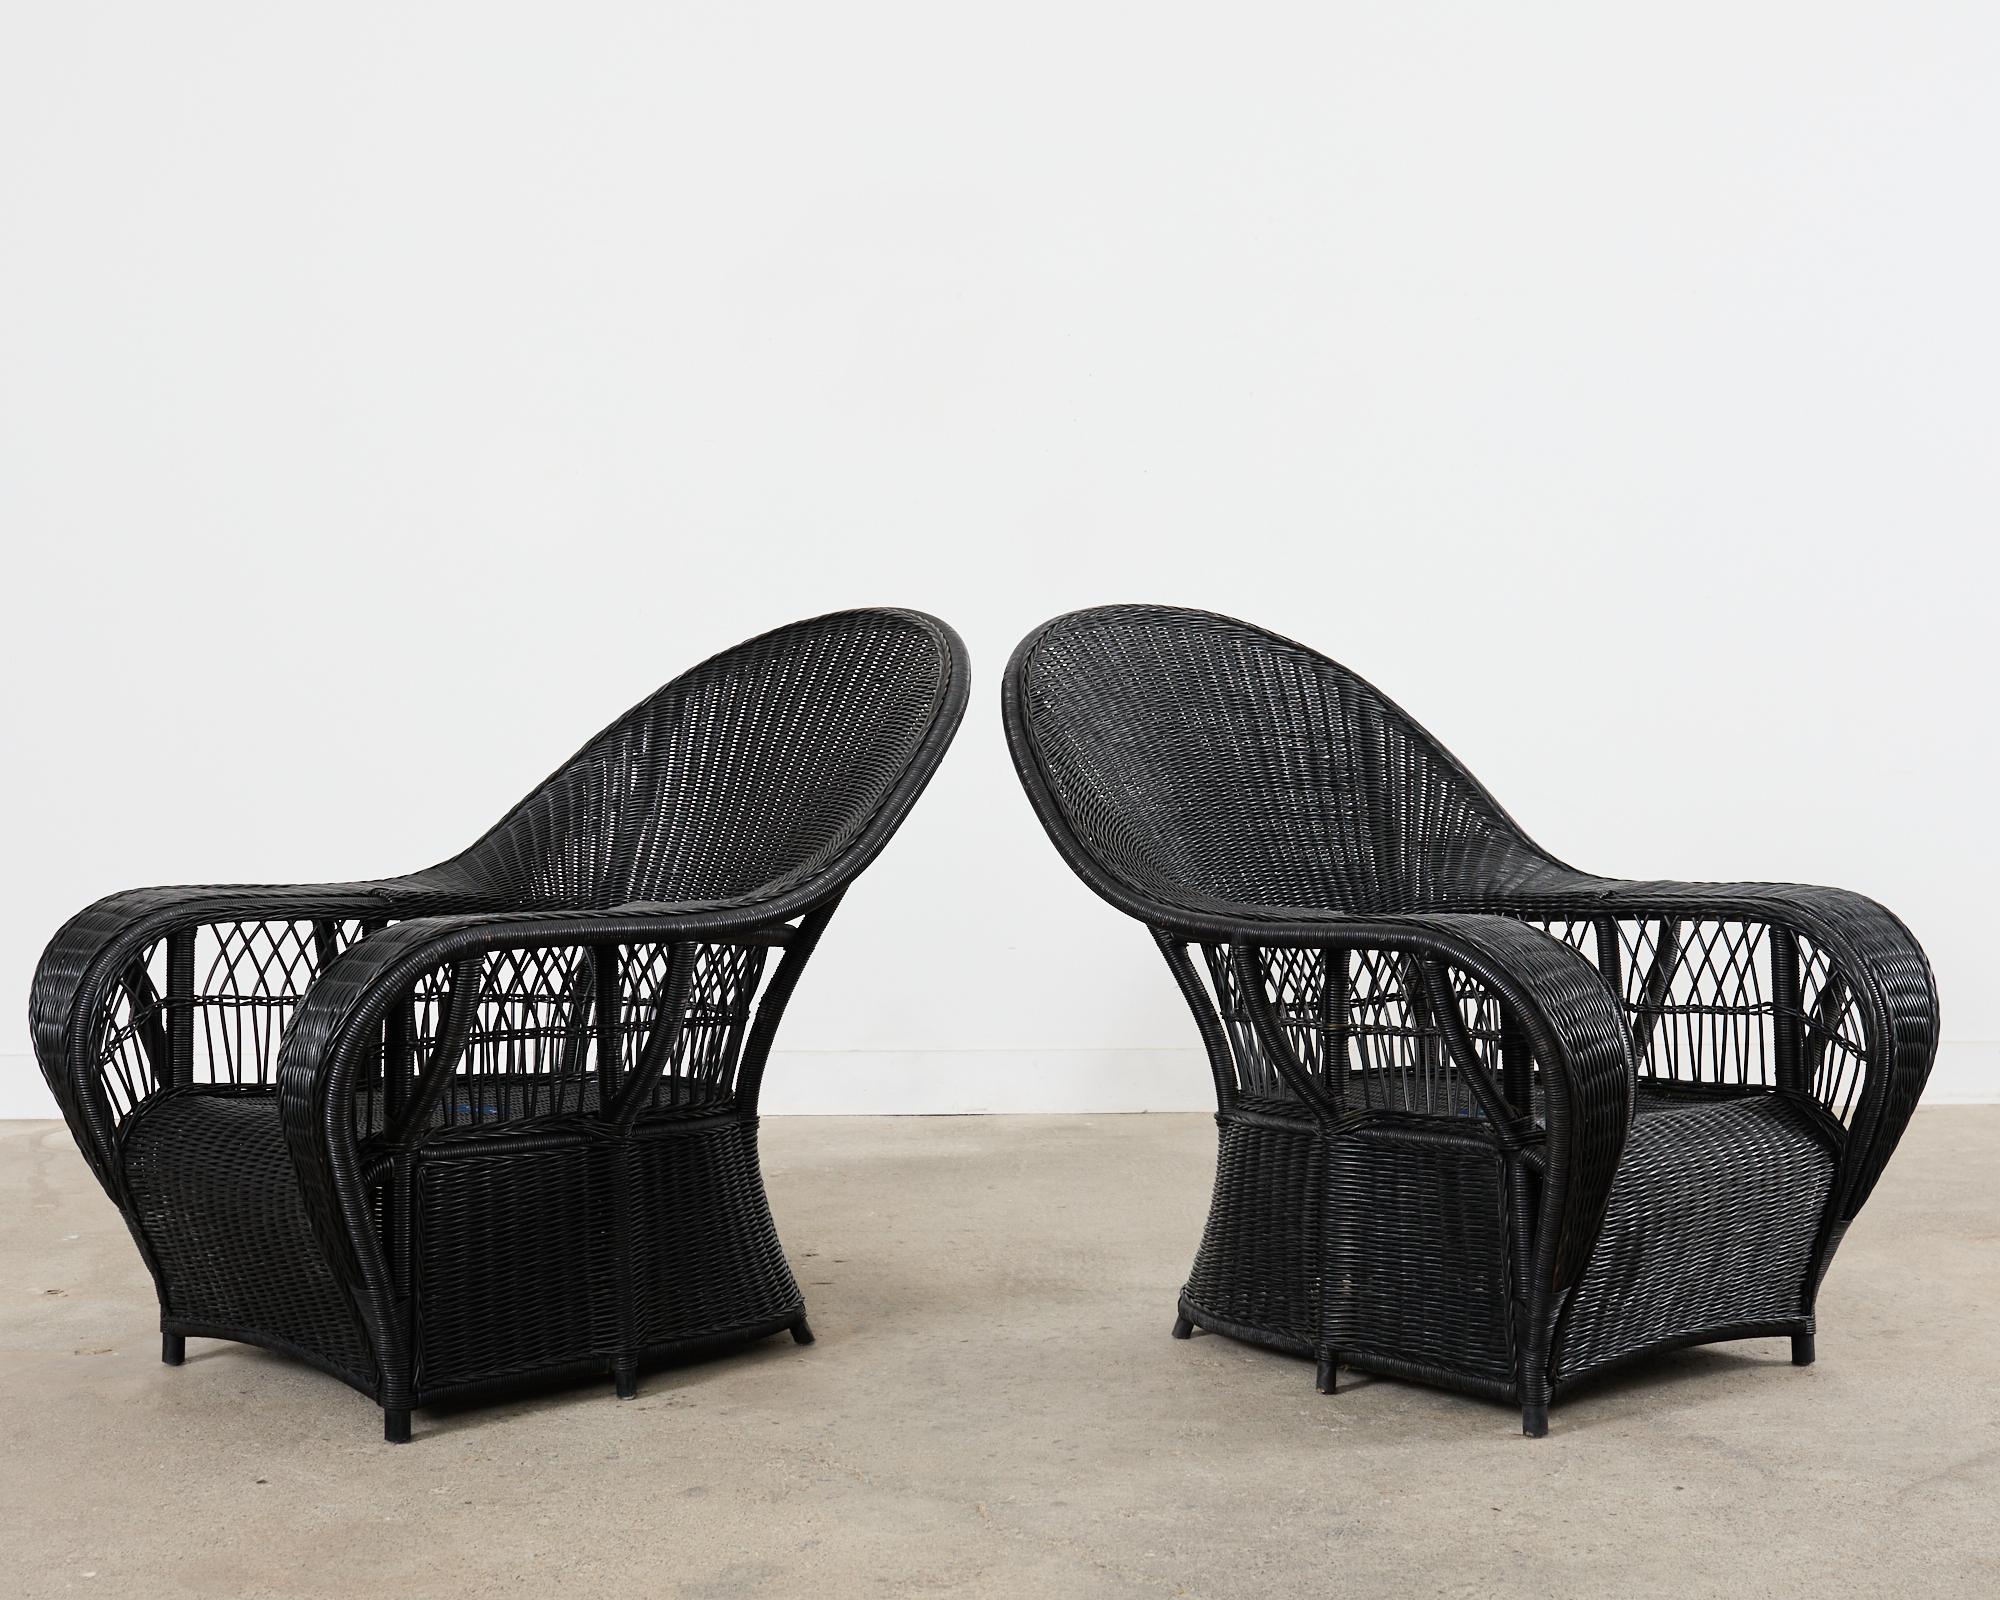 Pair of Ralph Lauren Wicker Rattan Garden Lounge Chairs In Good Condition For Sale In Rio Vista, CA